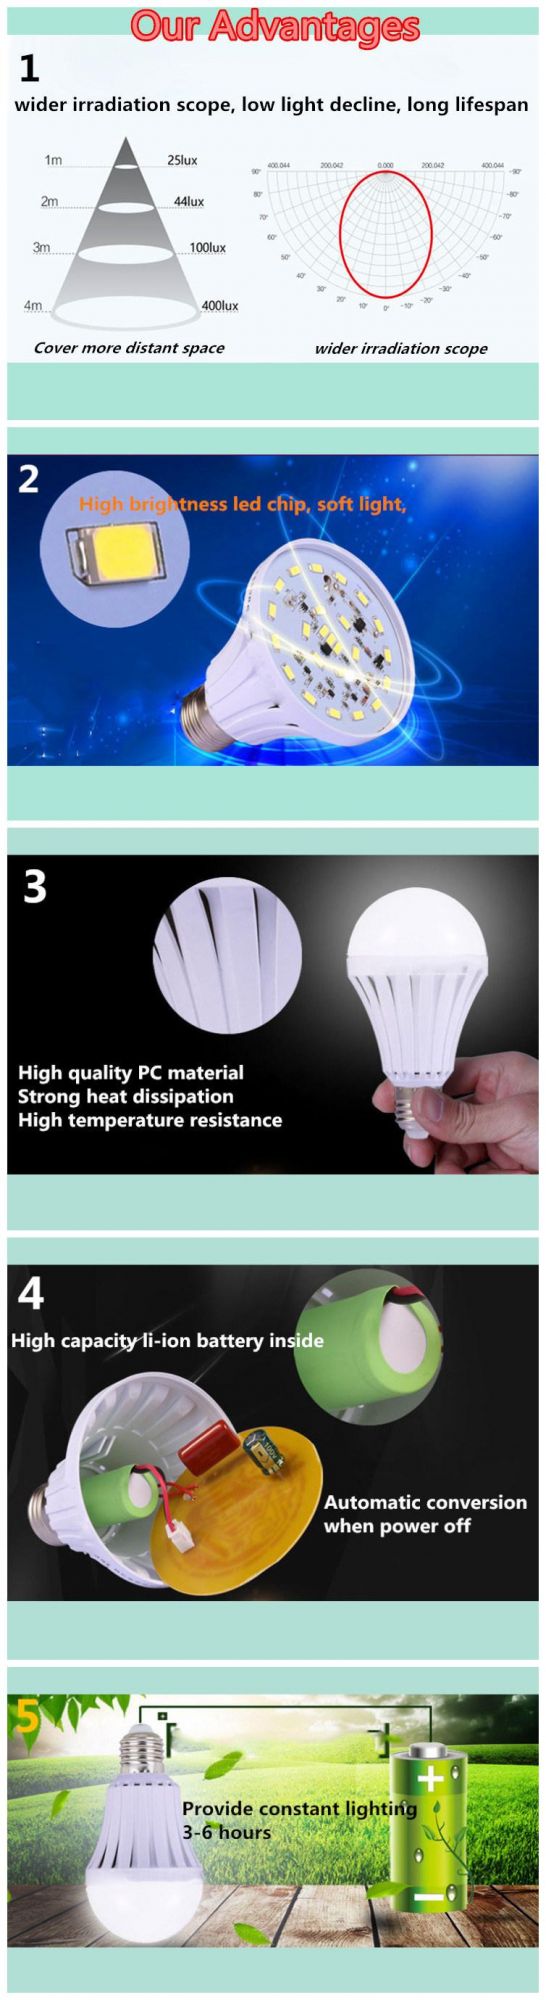 LED Smart USB Emergency Rechargeable Light Bulb Lamp